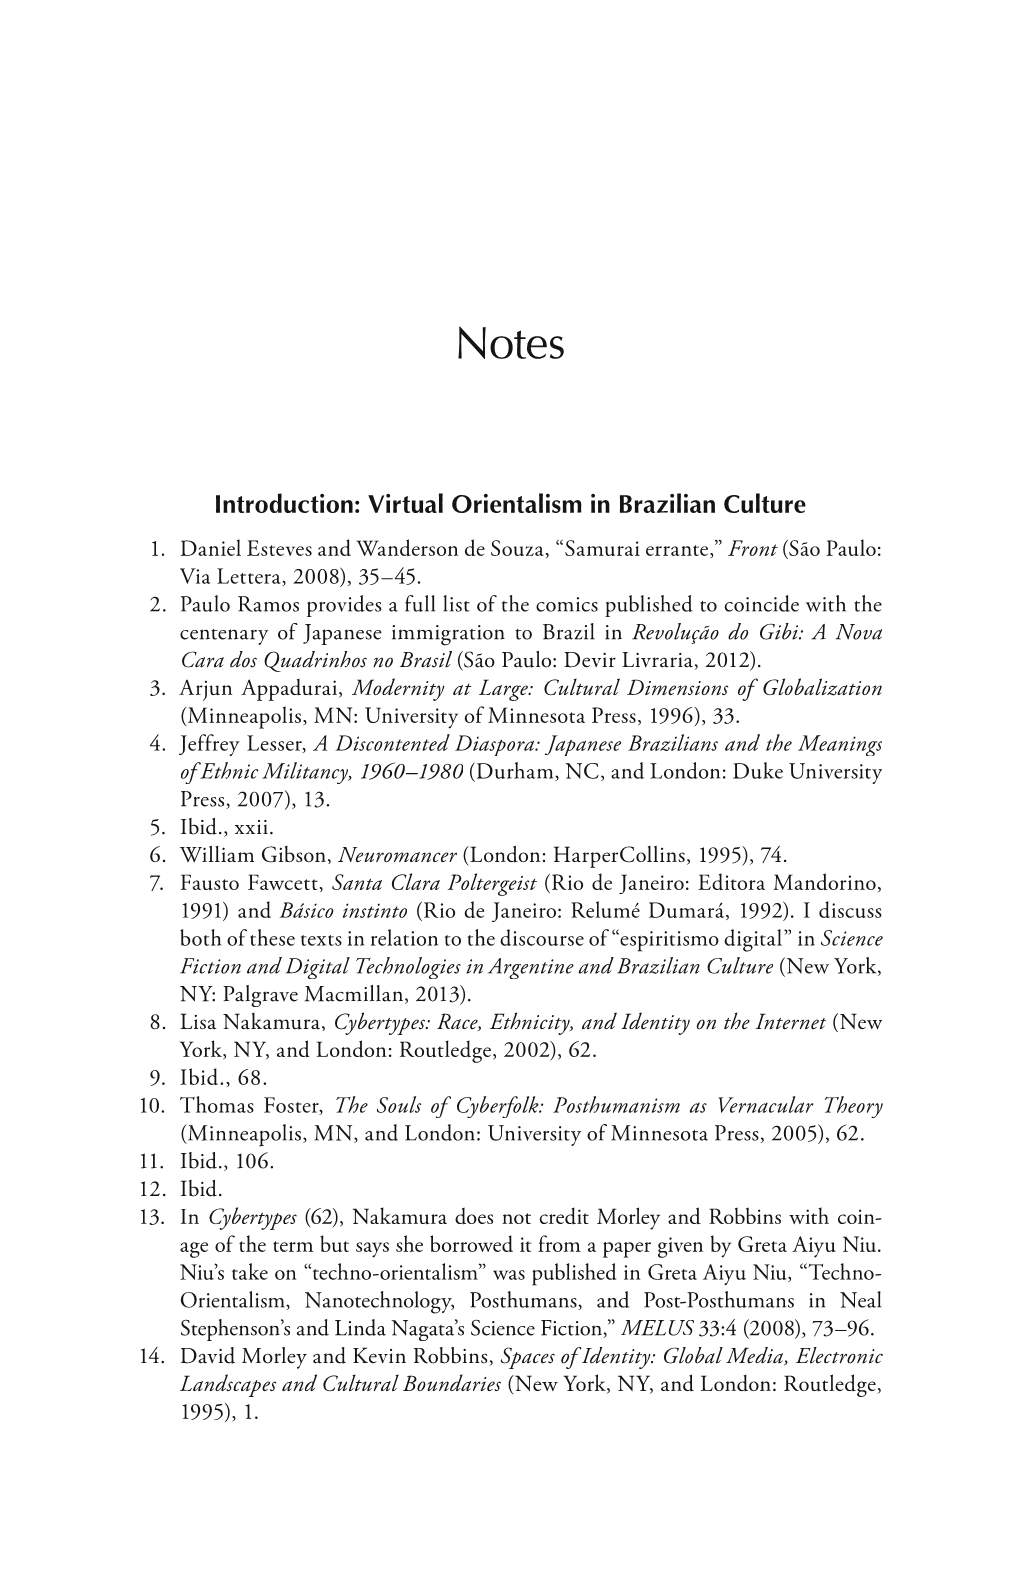 Introduction: Virtual Orientalism in Brazilian Culture 1